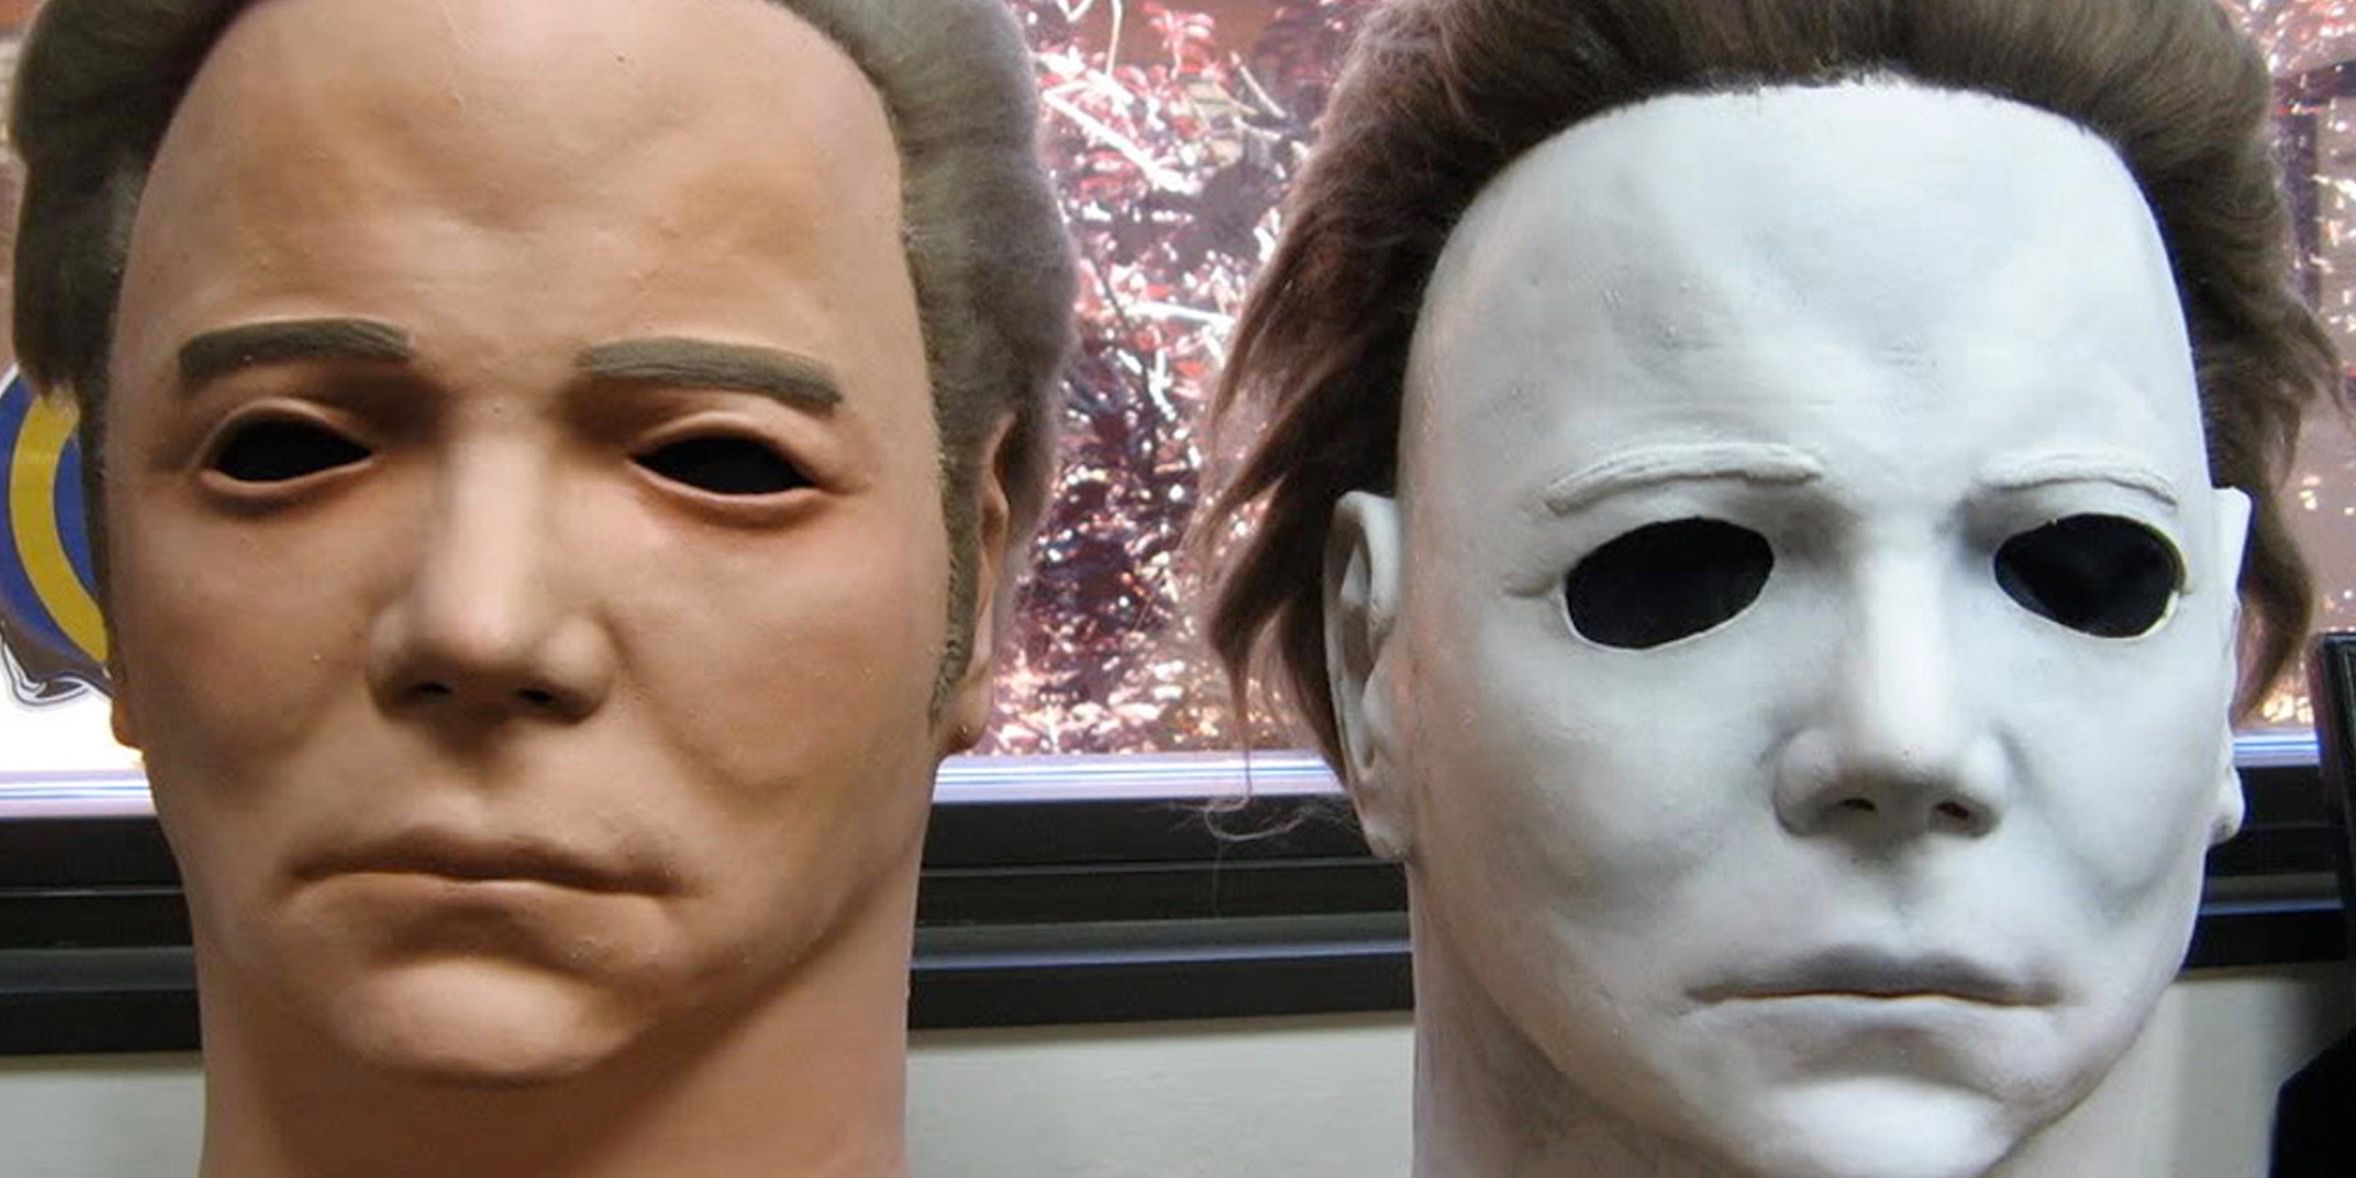 William-Shatner-and-Michael-Myers-Halloween-Mask-Comparison.jpg